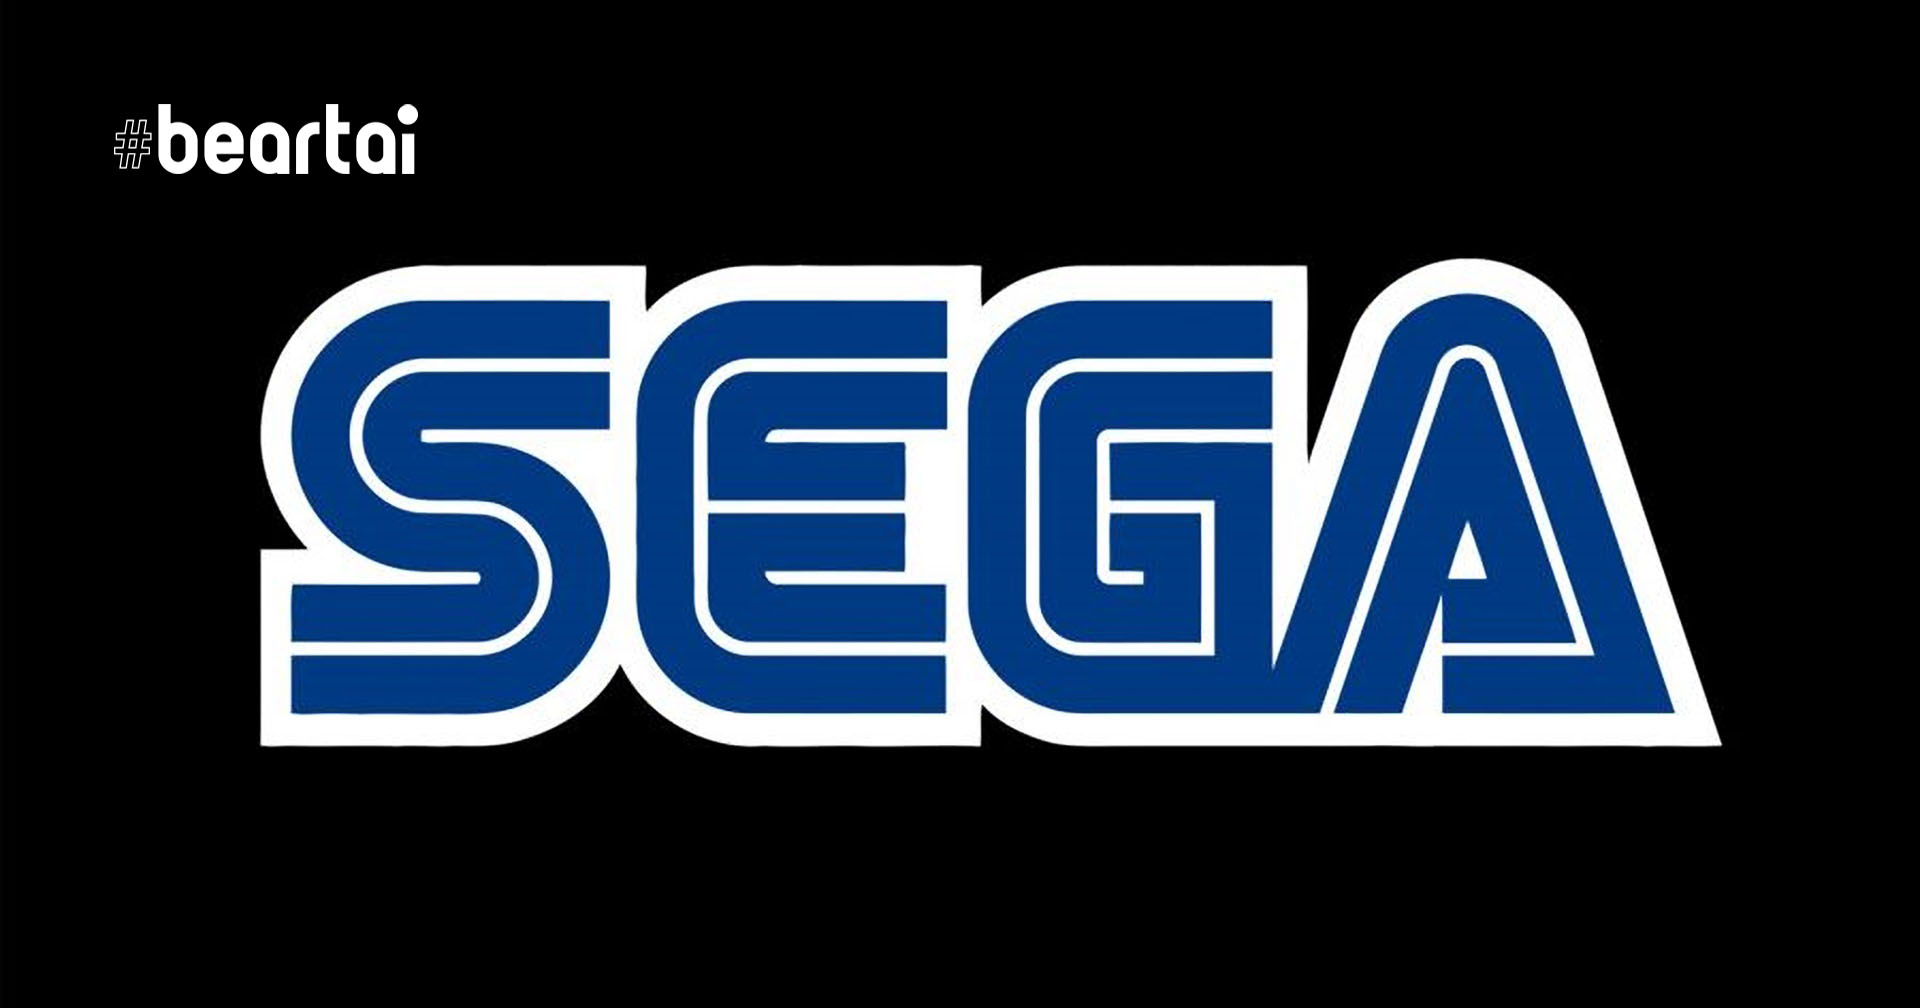 Sega Sammy ขายธุรกิจเกมอาร์เคดในญี่ปุ่นเหตุเพราะ Covid-19